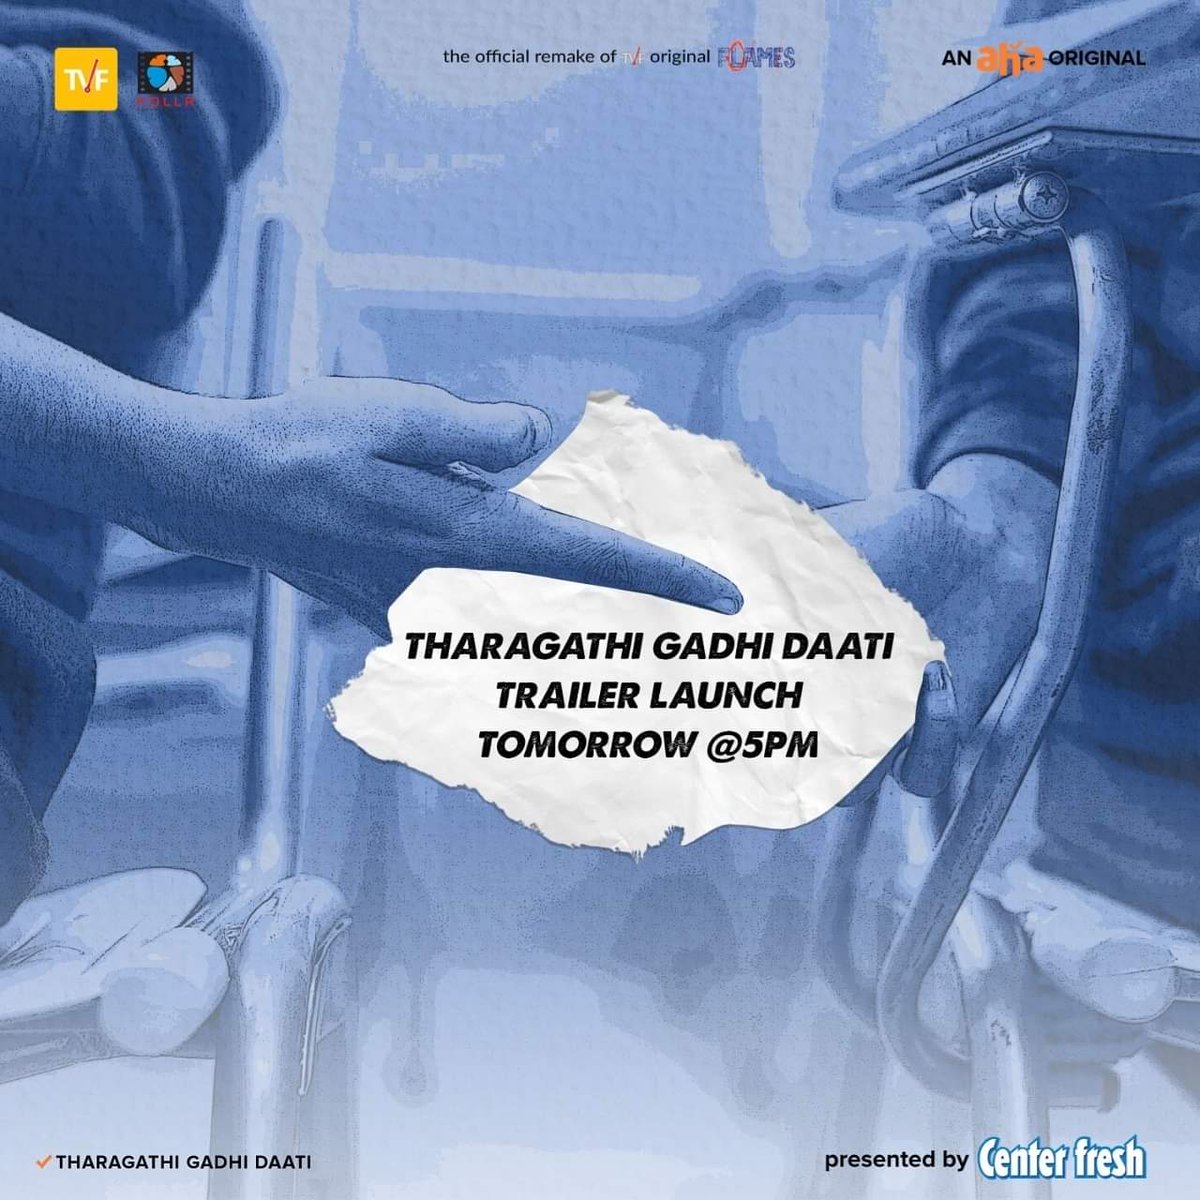 Buckle up and get ready to experience a 🎢 ride of friendship🤝 and love❤️ #TharagathiGadhiDaati trailer releasing tomorrow! @HarshithReddyM @TheViralFever @TheQtiyapaGuy @CenterfreshIn #PayalRadhakrisna #MallikRam @Ki2Vissapragada